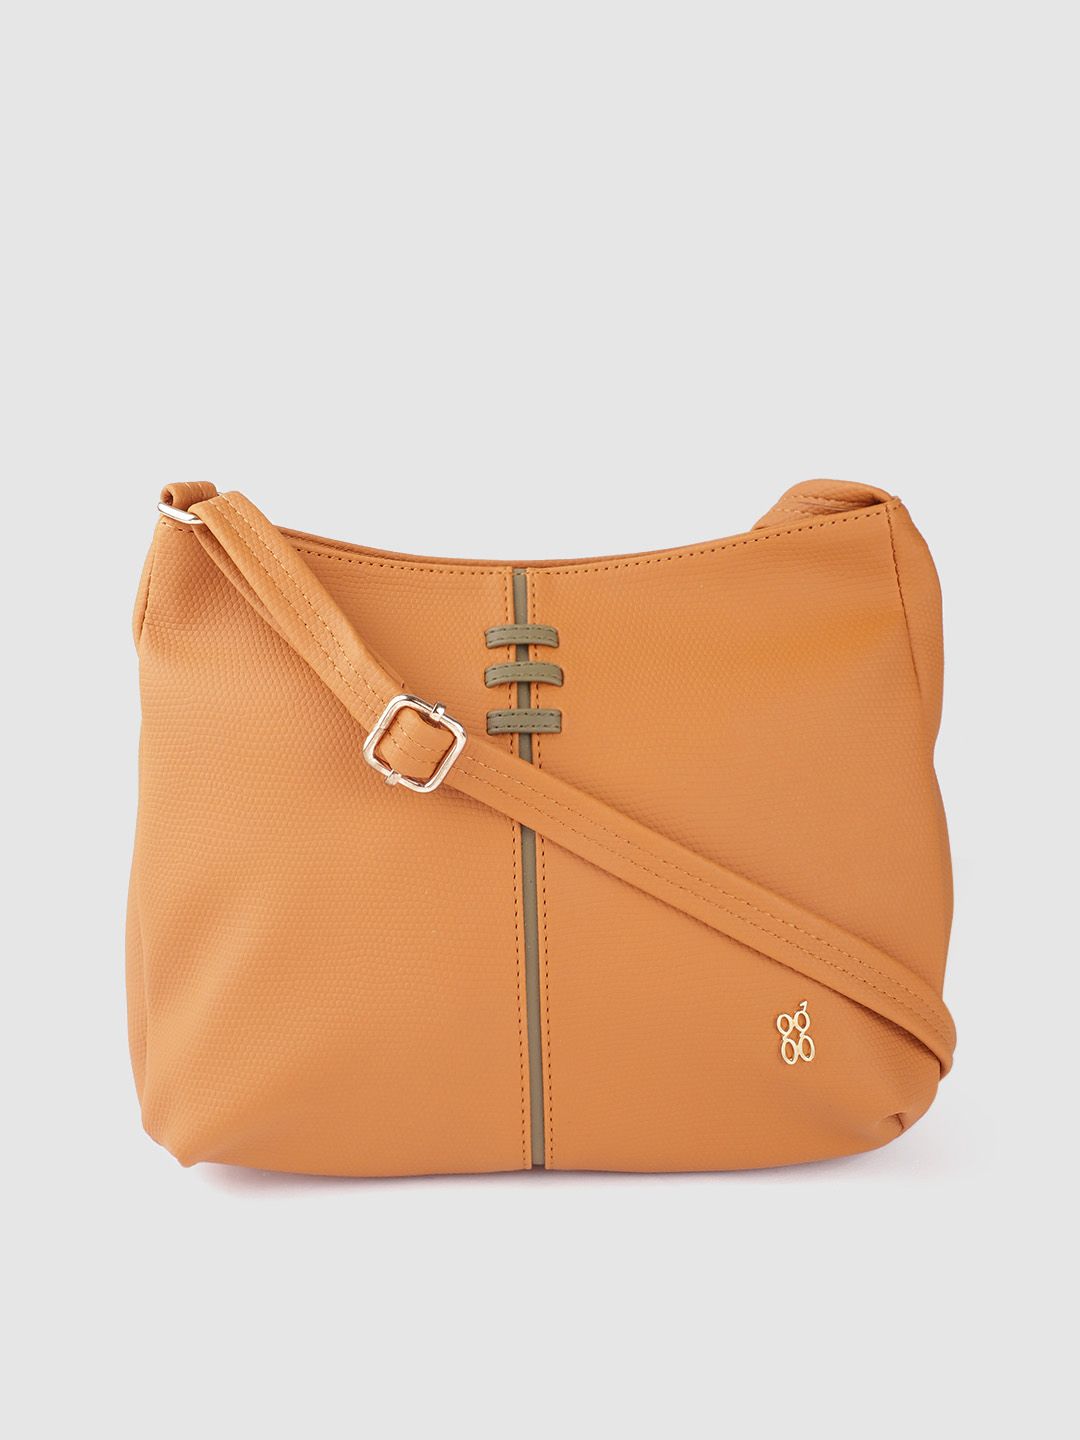 Baggit Orange Structured Sling Bag Price in India